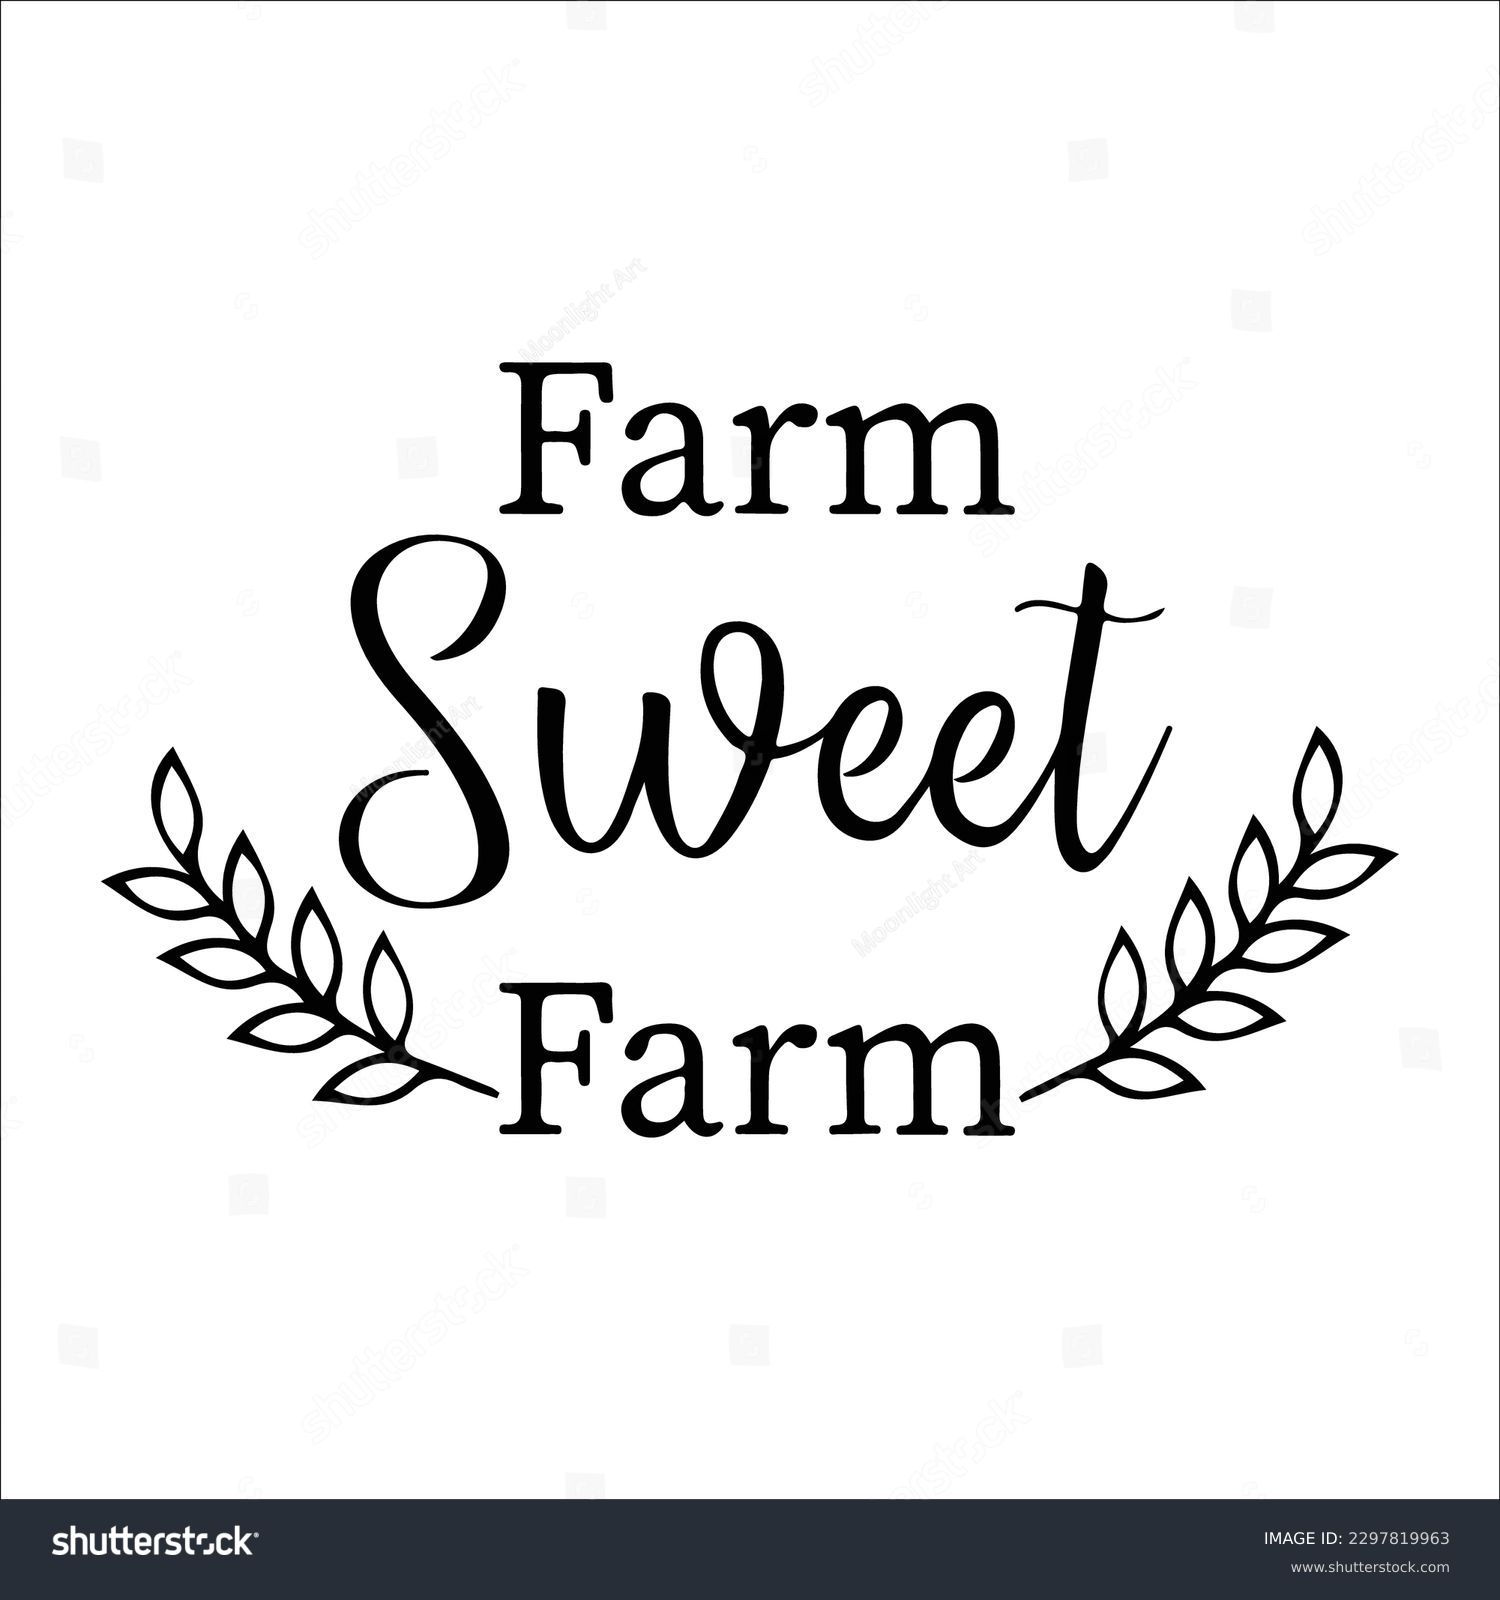 SVG of Farm SVG, Farm Life, Farm Sweet Farm SVG, Png, eps, Silhouette Cricut Glowforge Cut File, Clipart Digital Download svg